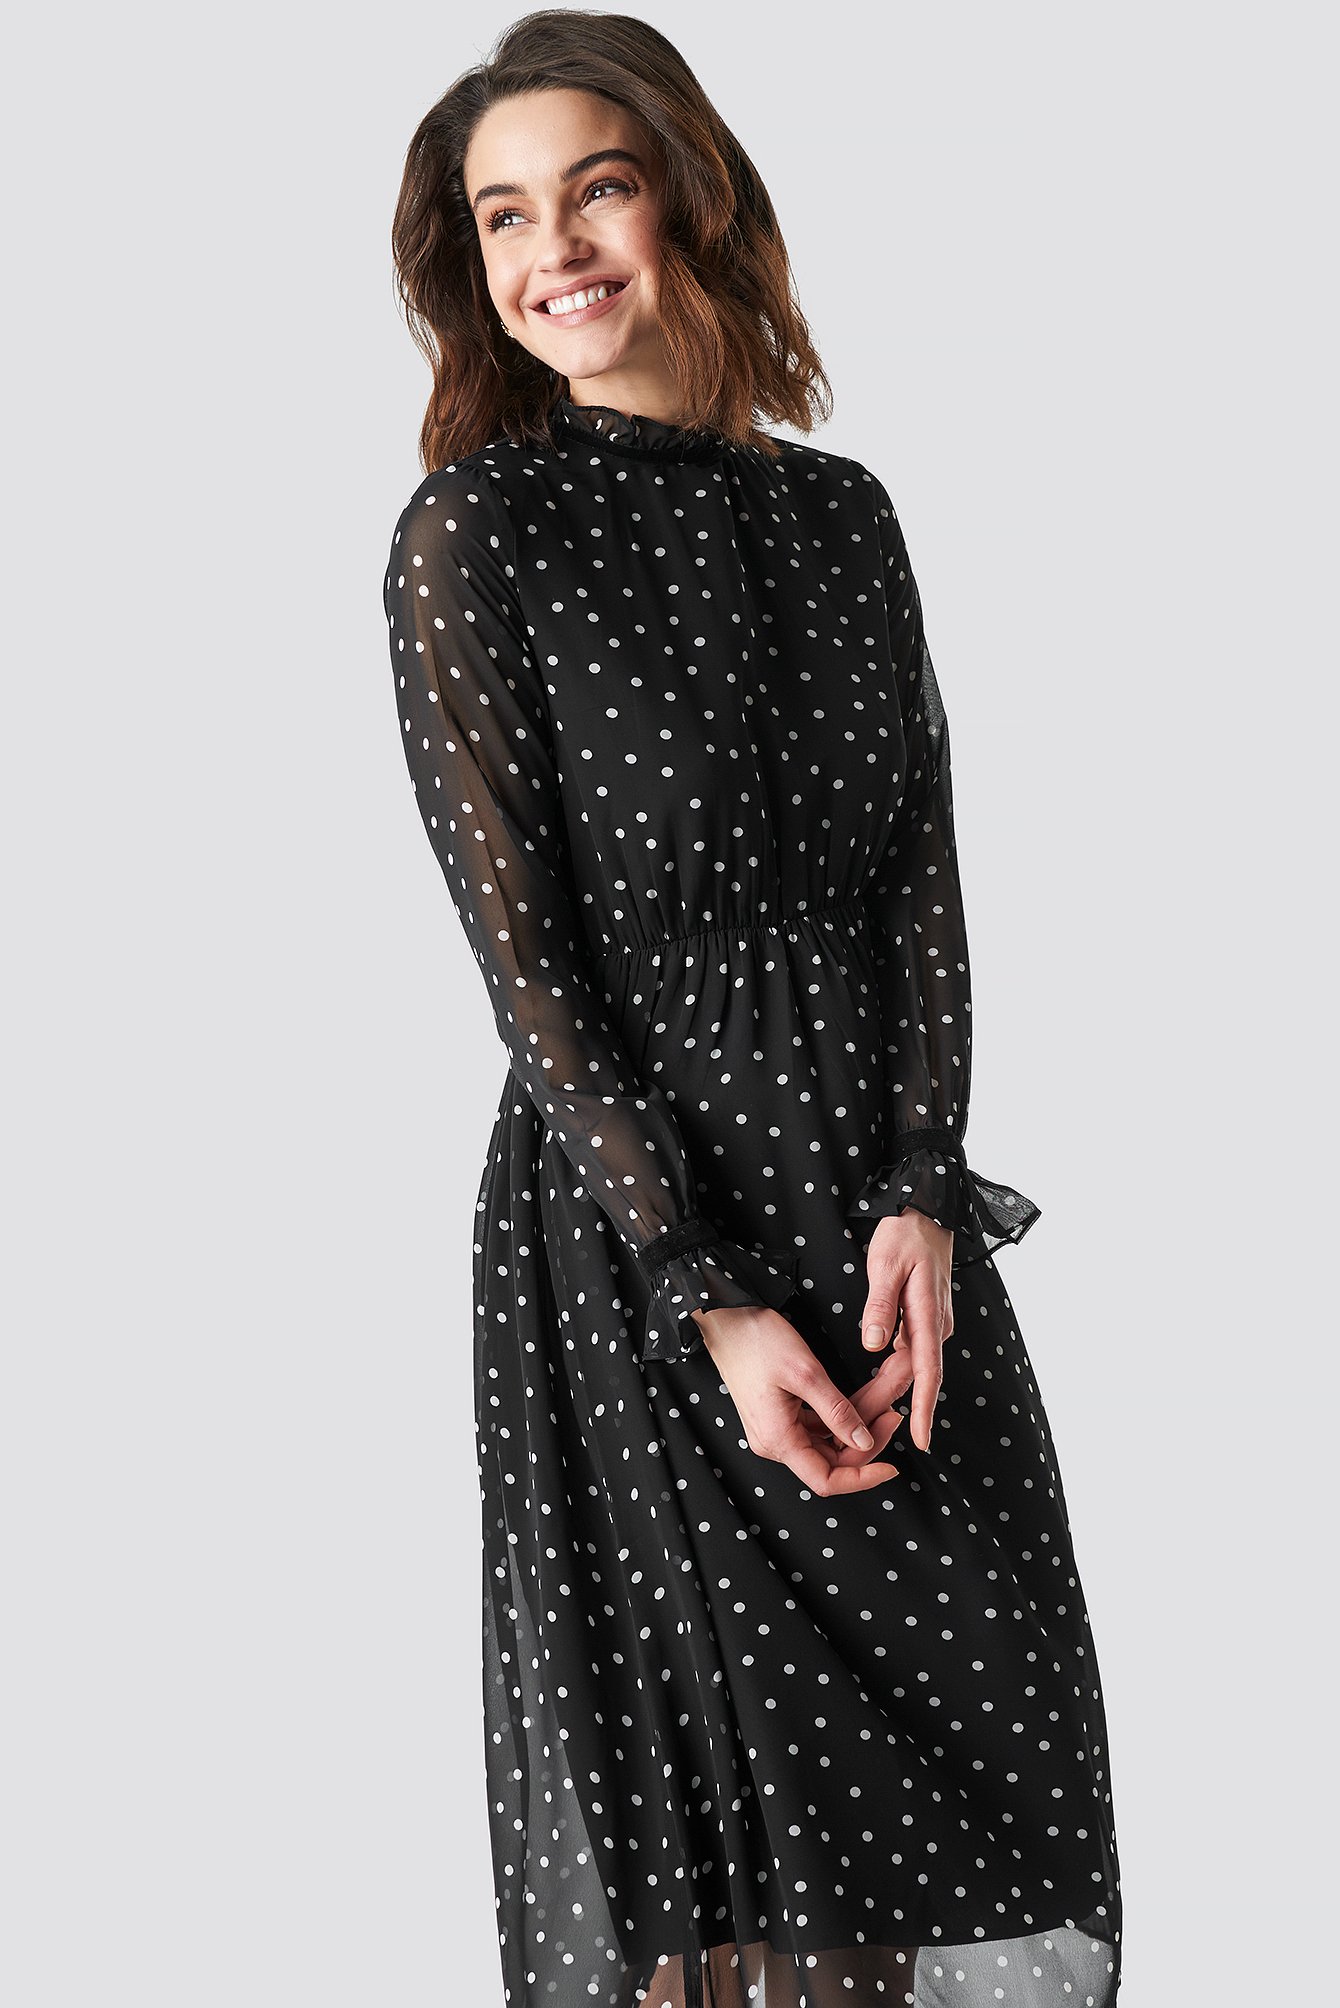 Black/White dots NA-KD Boho Frill Detail High Neck Chiffon Dress